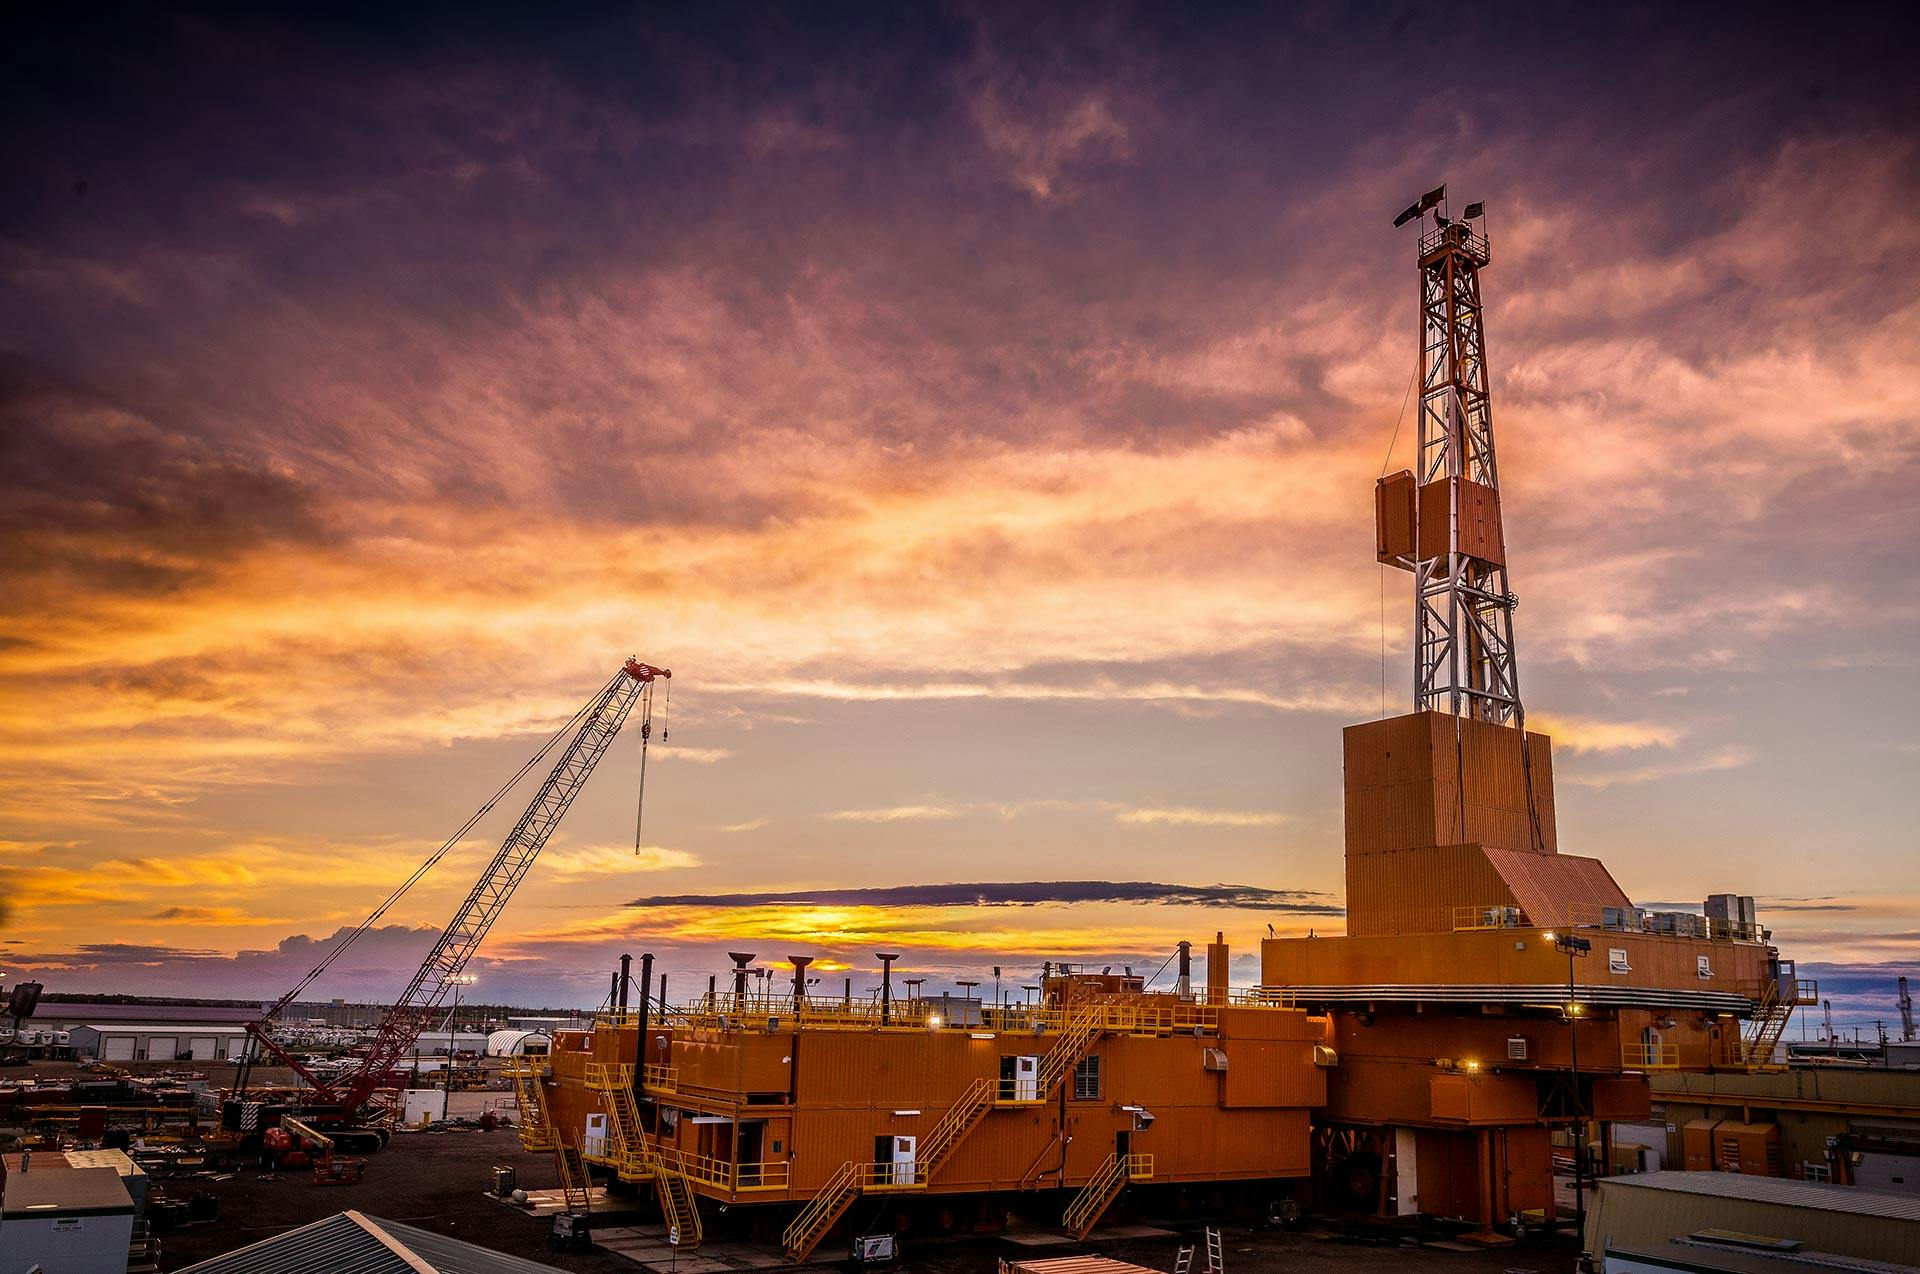 Arctic drilling rig in the Dreco rig-up yard in Nisku, Alberta, Canada